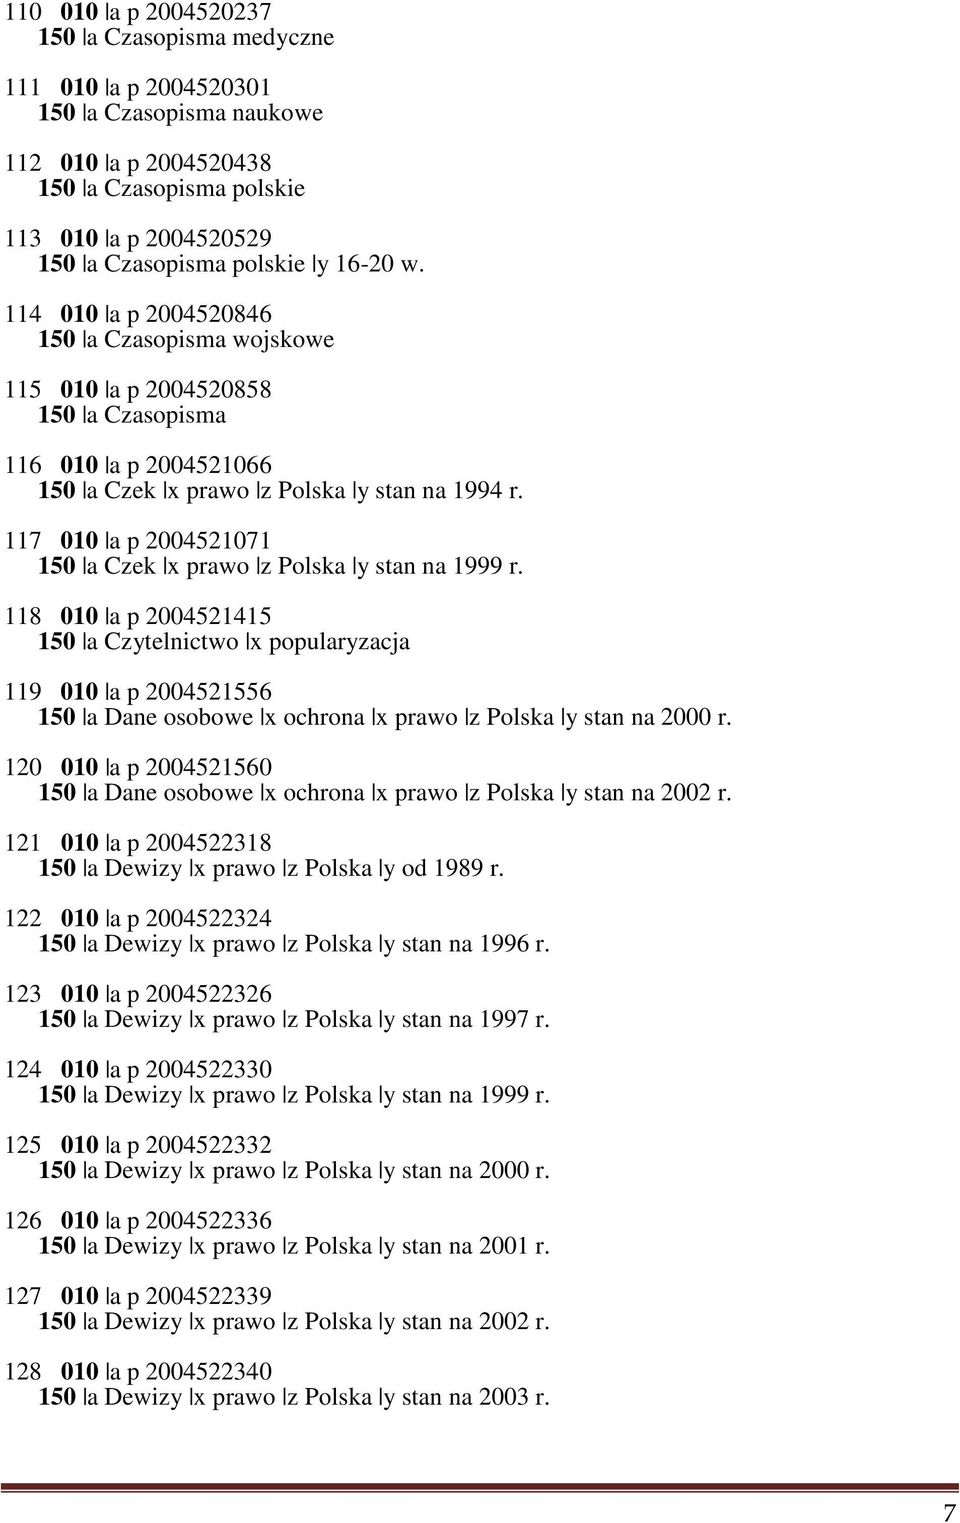 117 010 a p 2004521071 150 a Czek x prawo z Polska y stan na 1999 r.